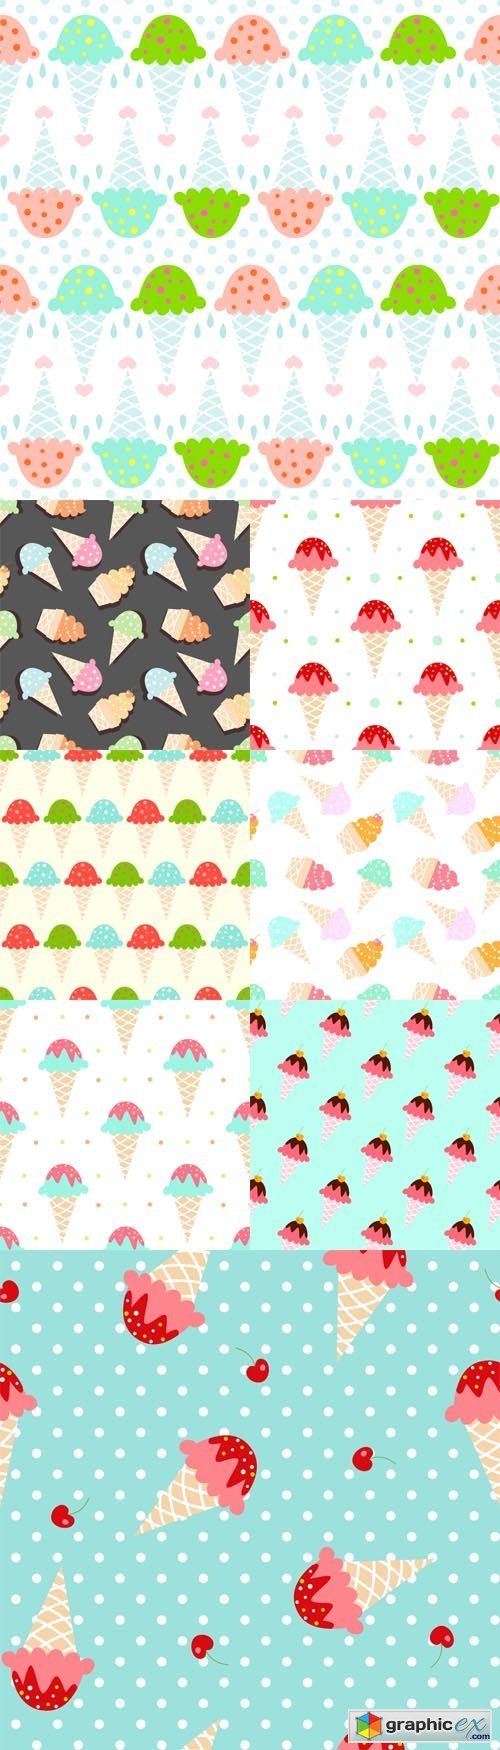 Ice Cream Seamless Patterns